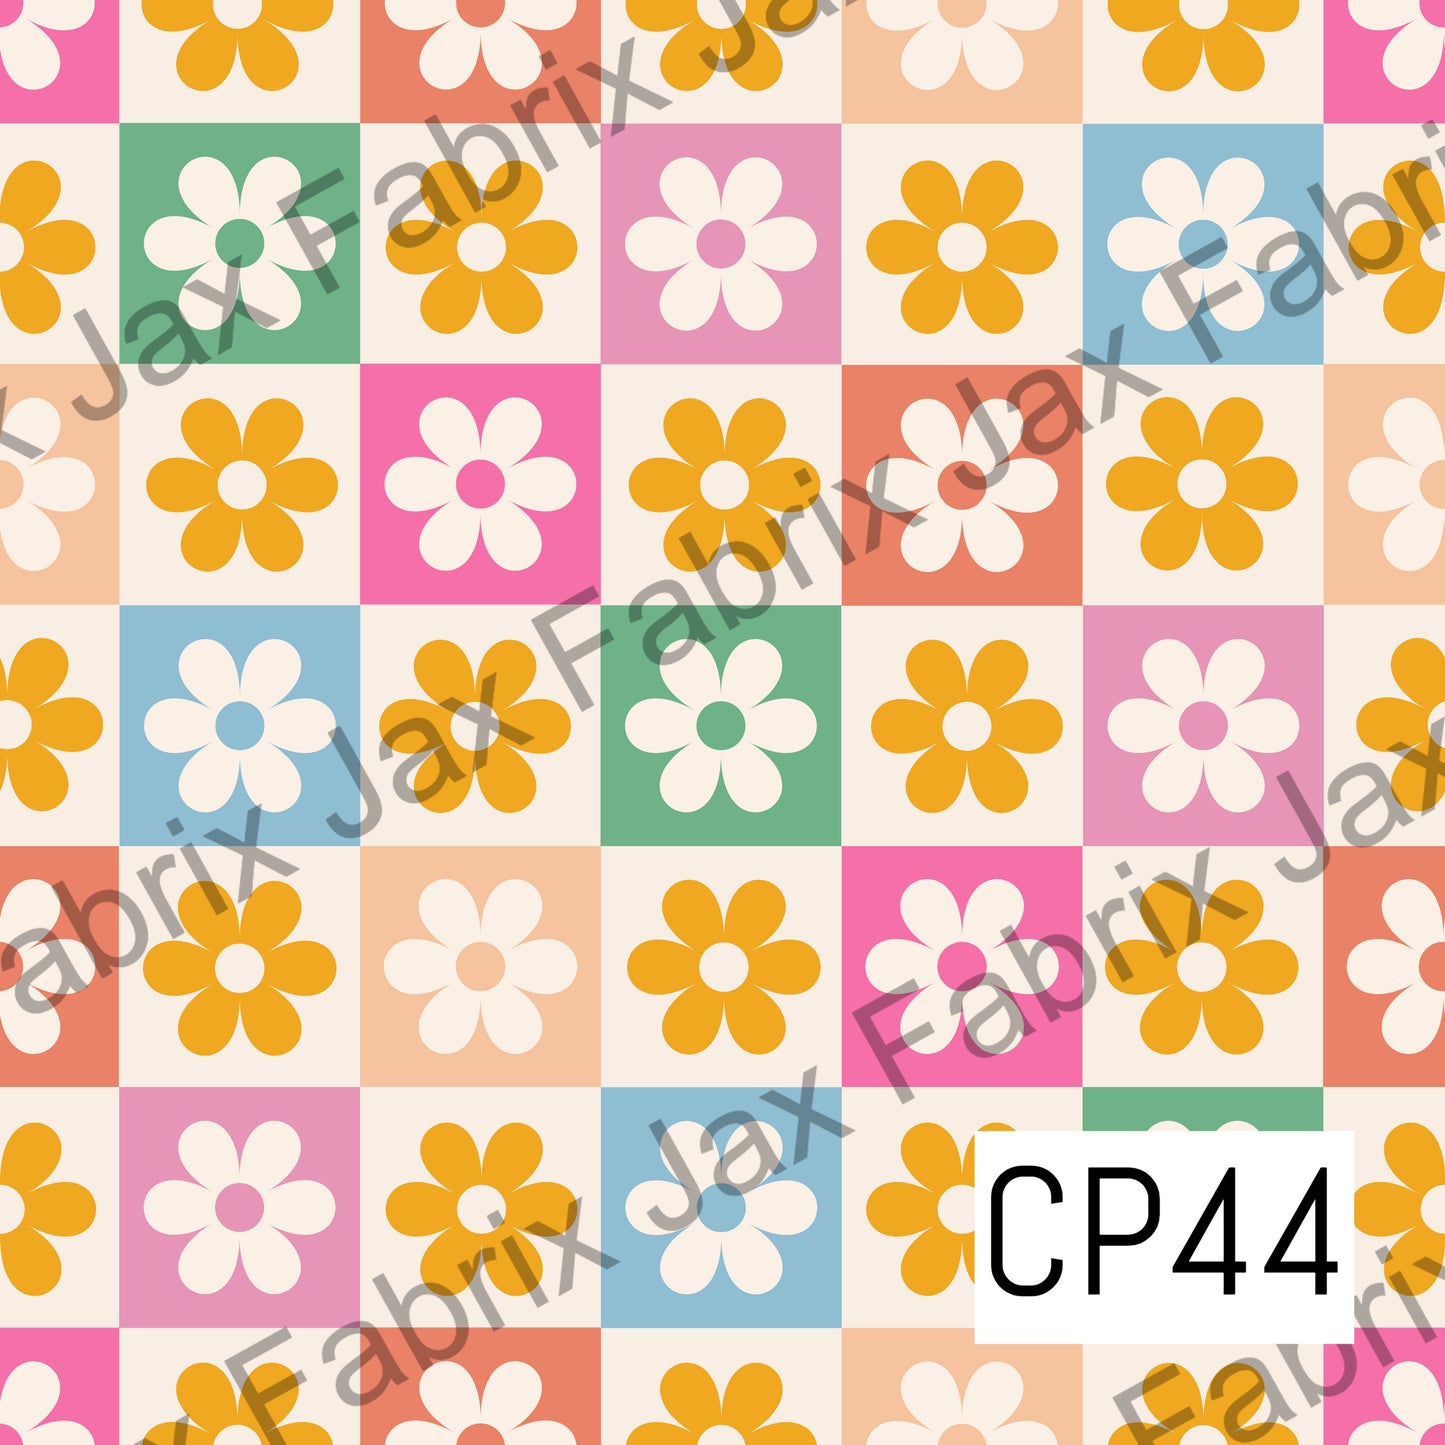 CP44